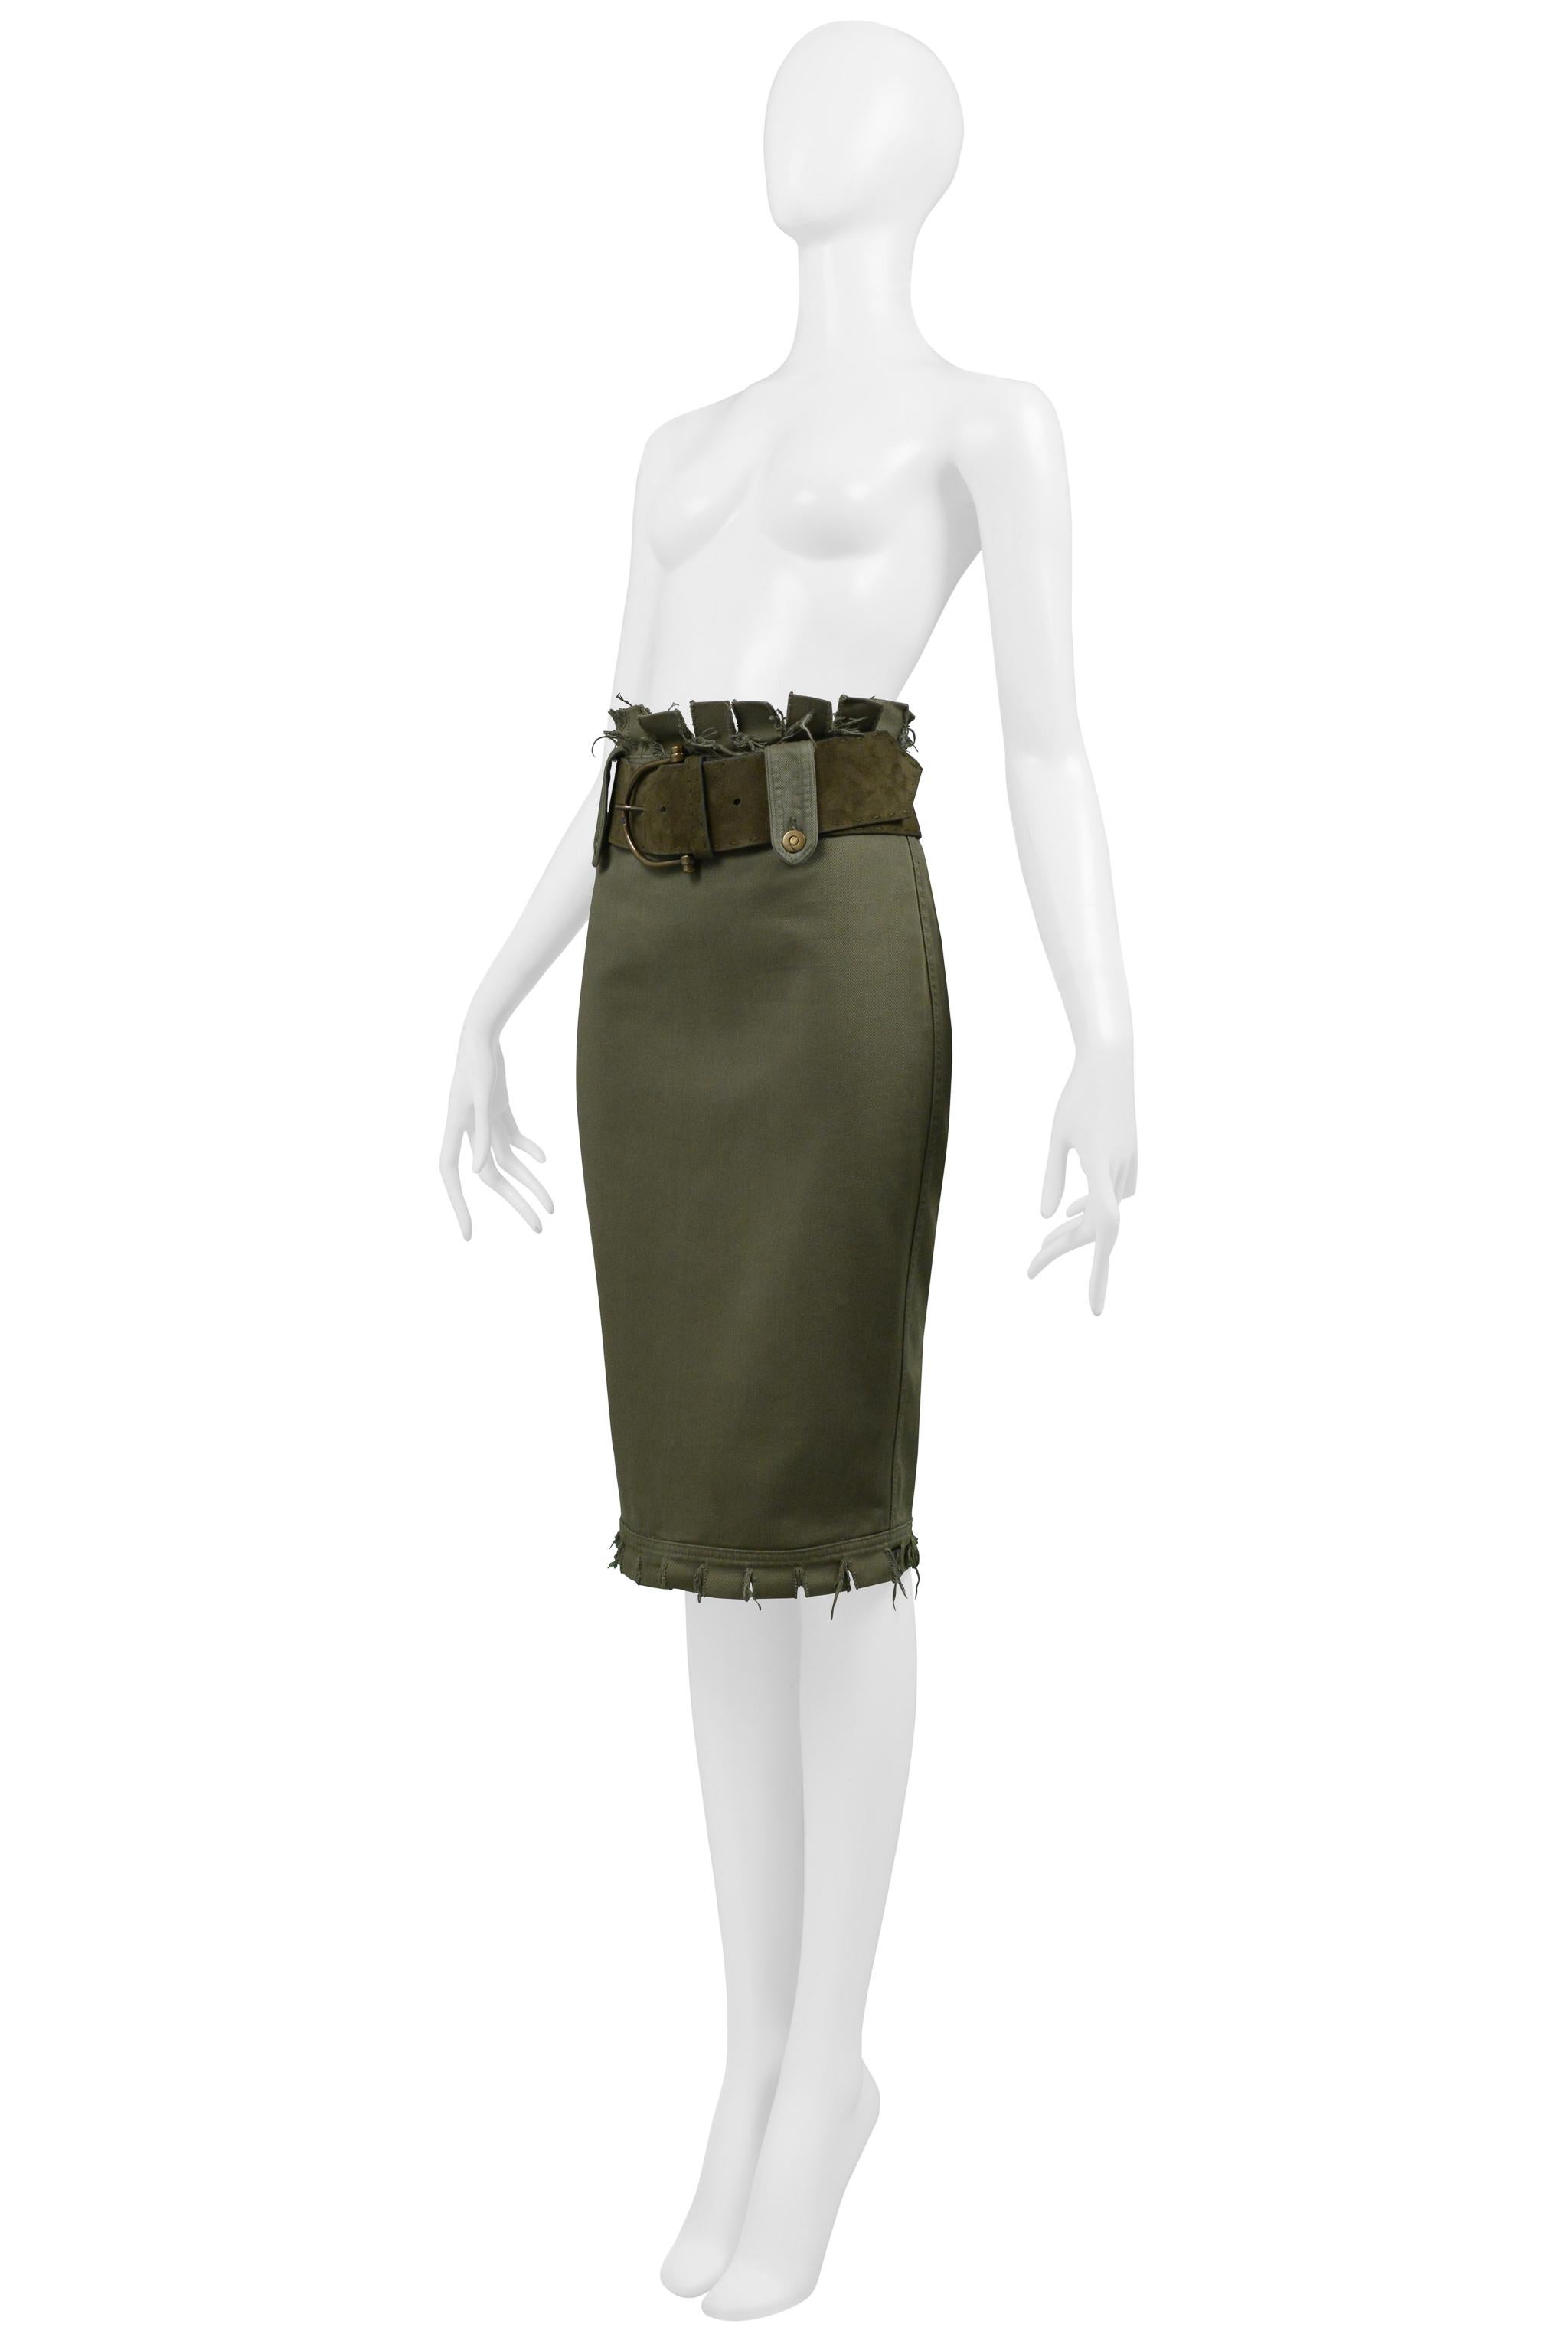 Alexander Mcqueen Olive Frayed Skirt Ss 2003 For Sale 2